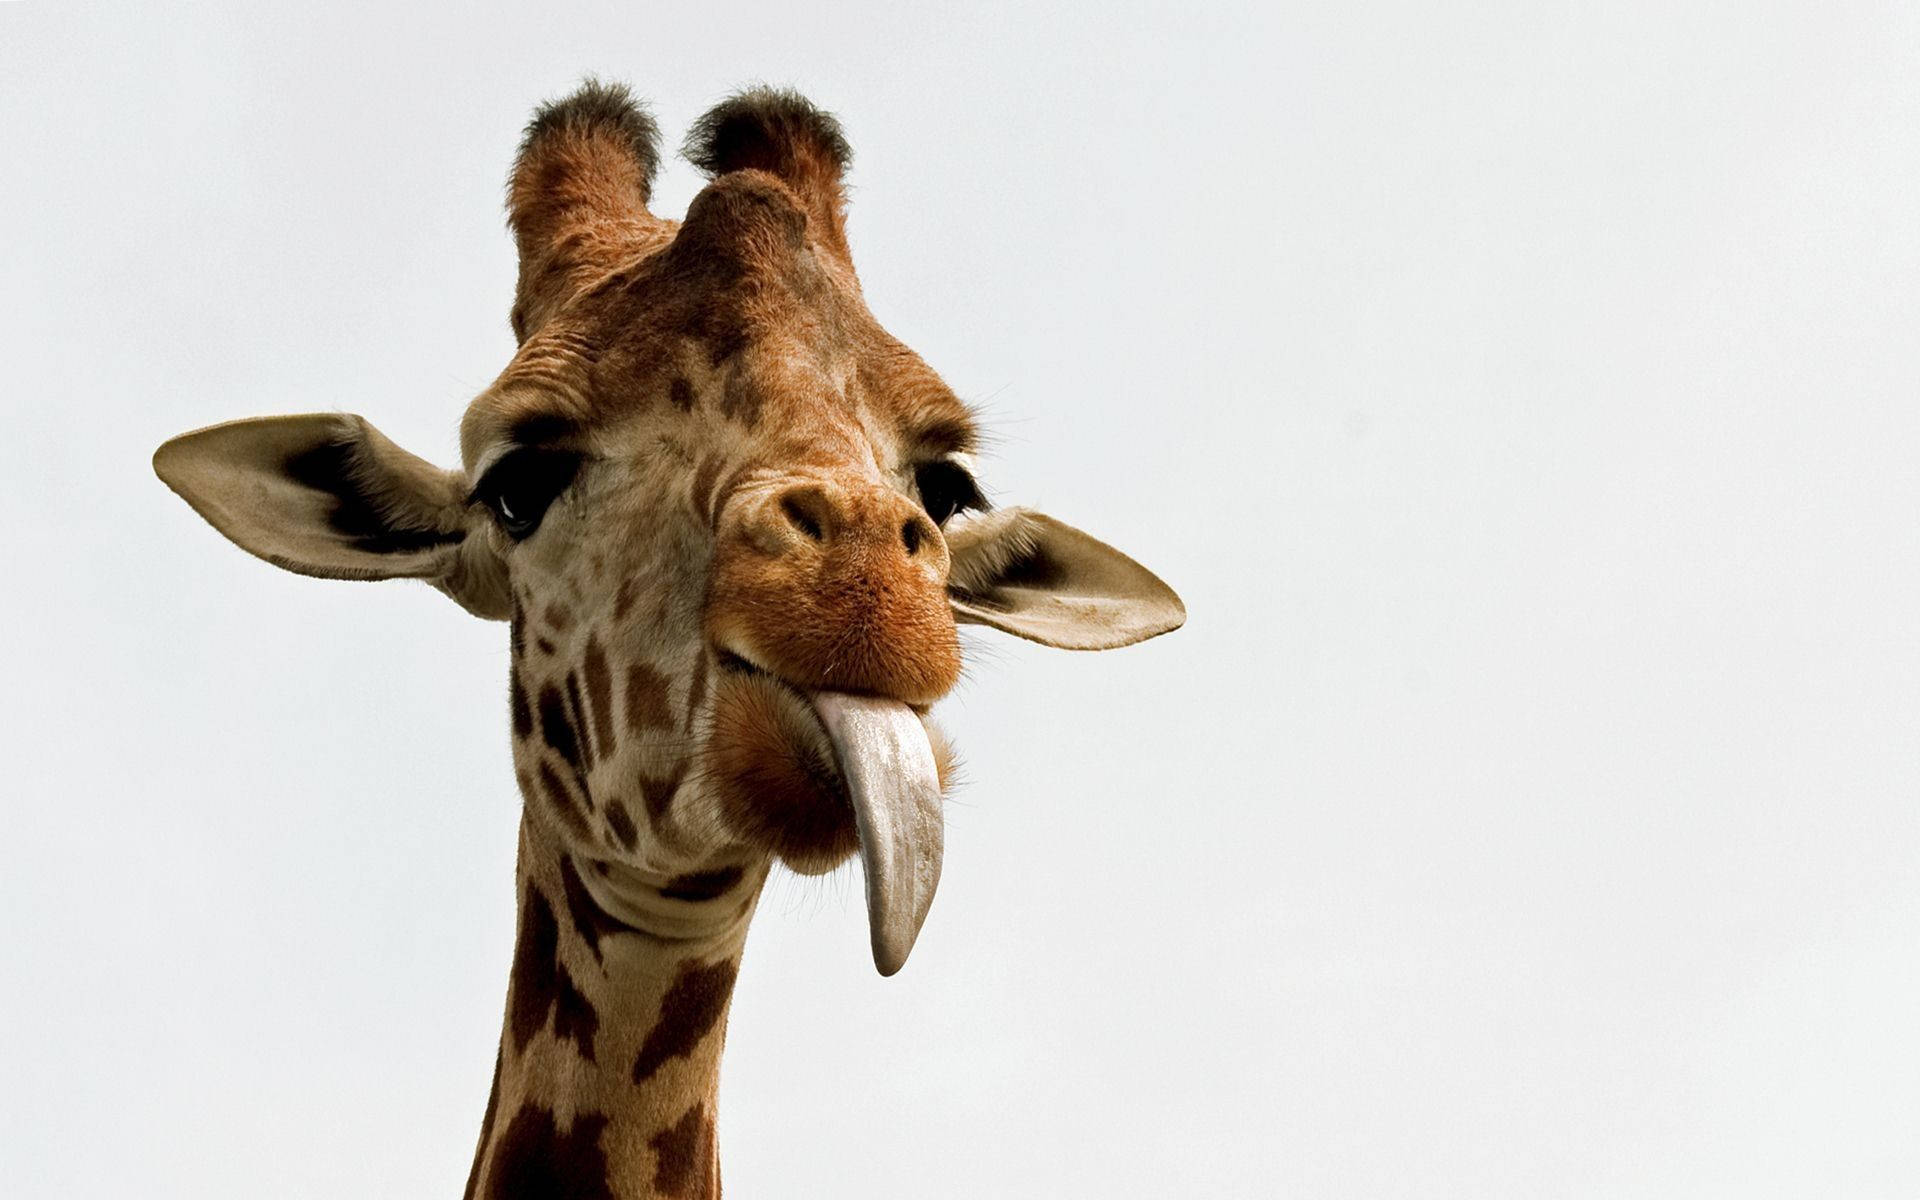 Baby Giraffe Tongue Out